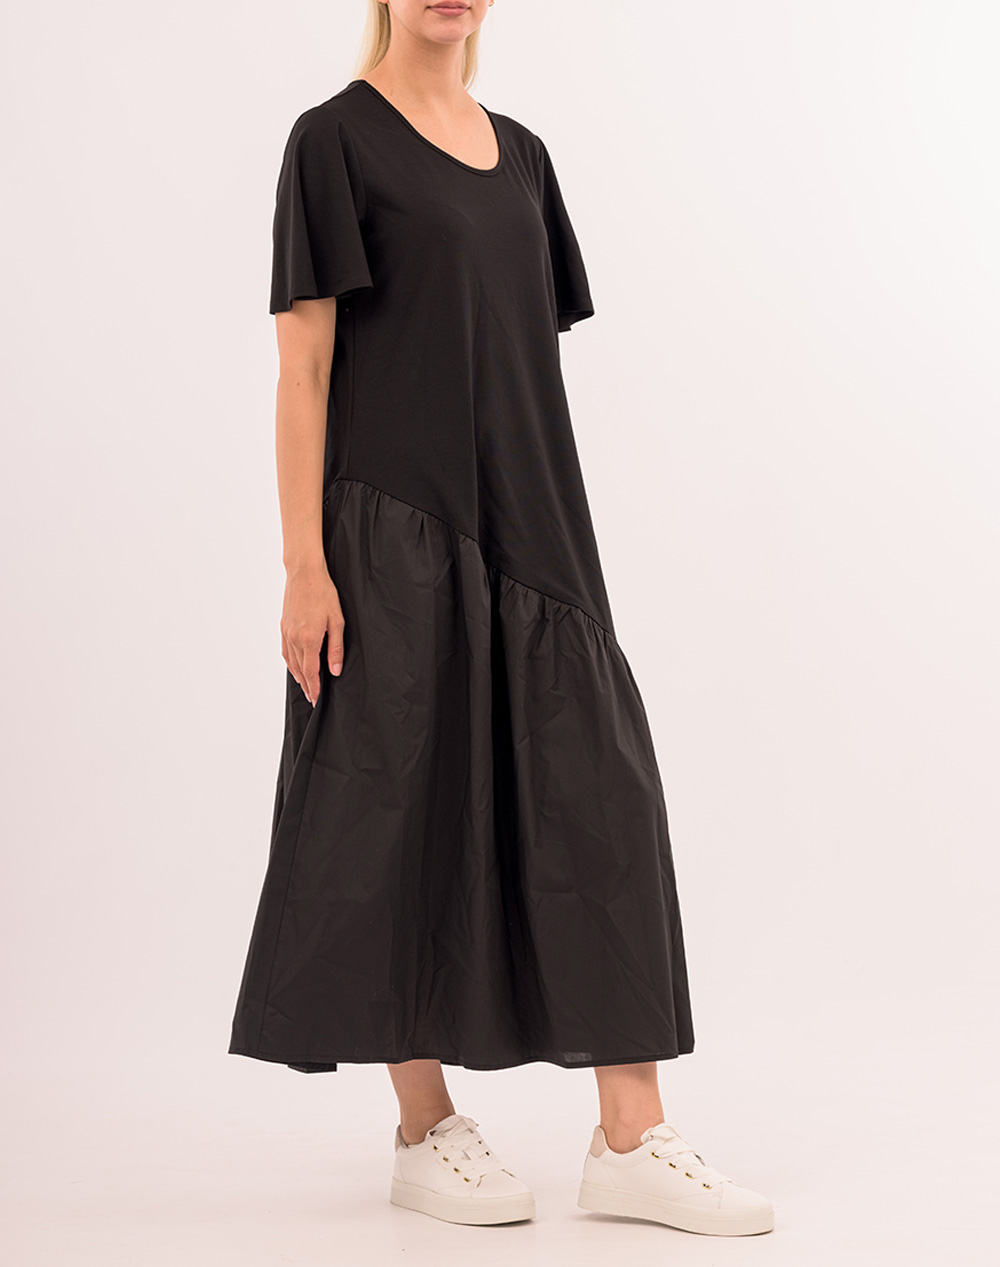 FOREL Φόρεμα μακρύ σε άνετη γραμμή με συνδυασμό υφασμάτων 078.50.01.064-Μαύρο Black